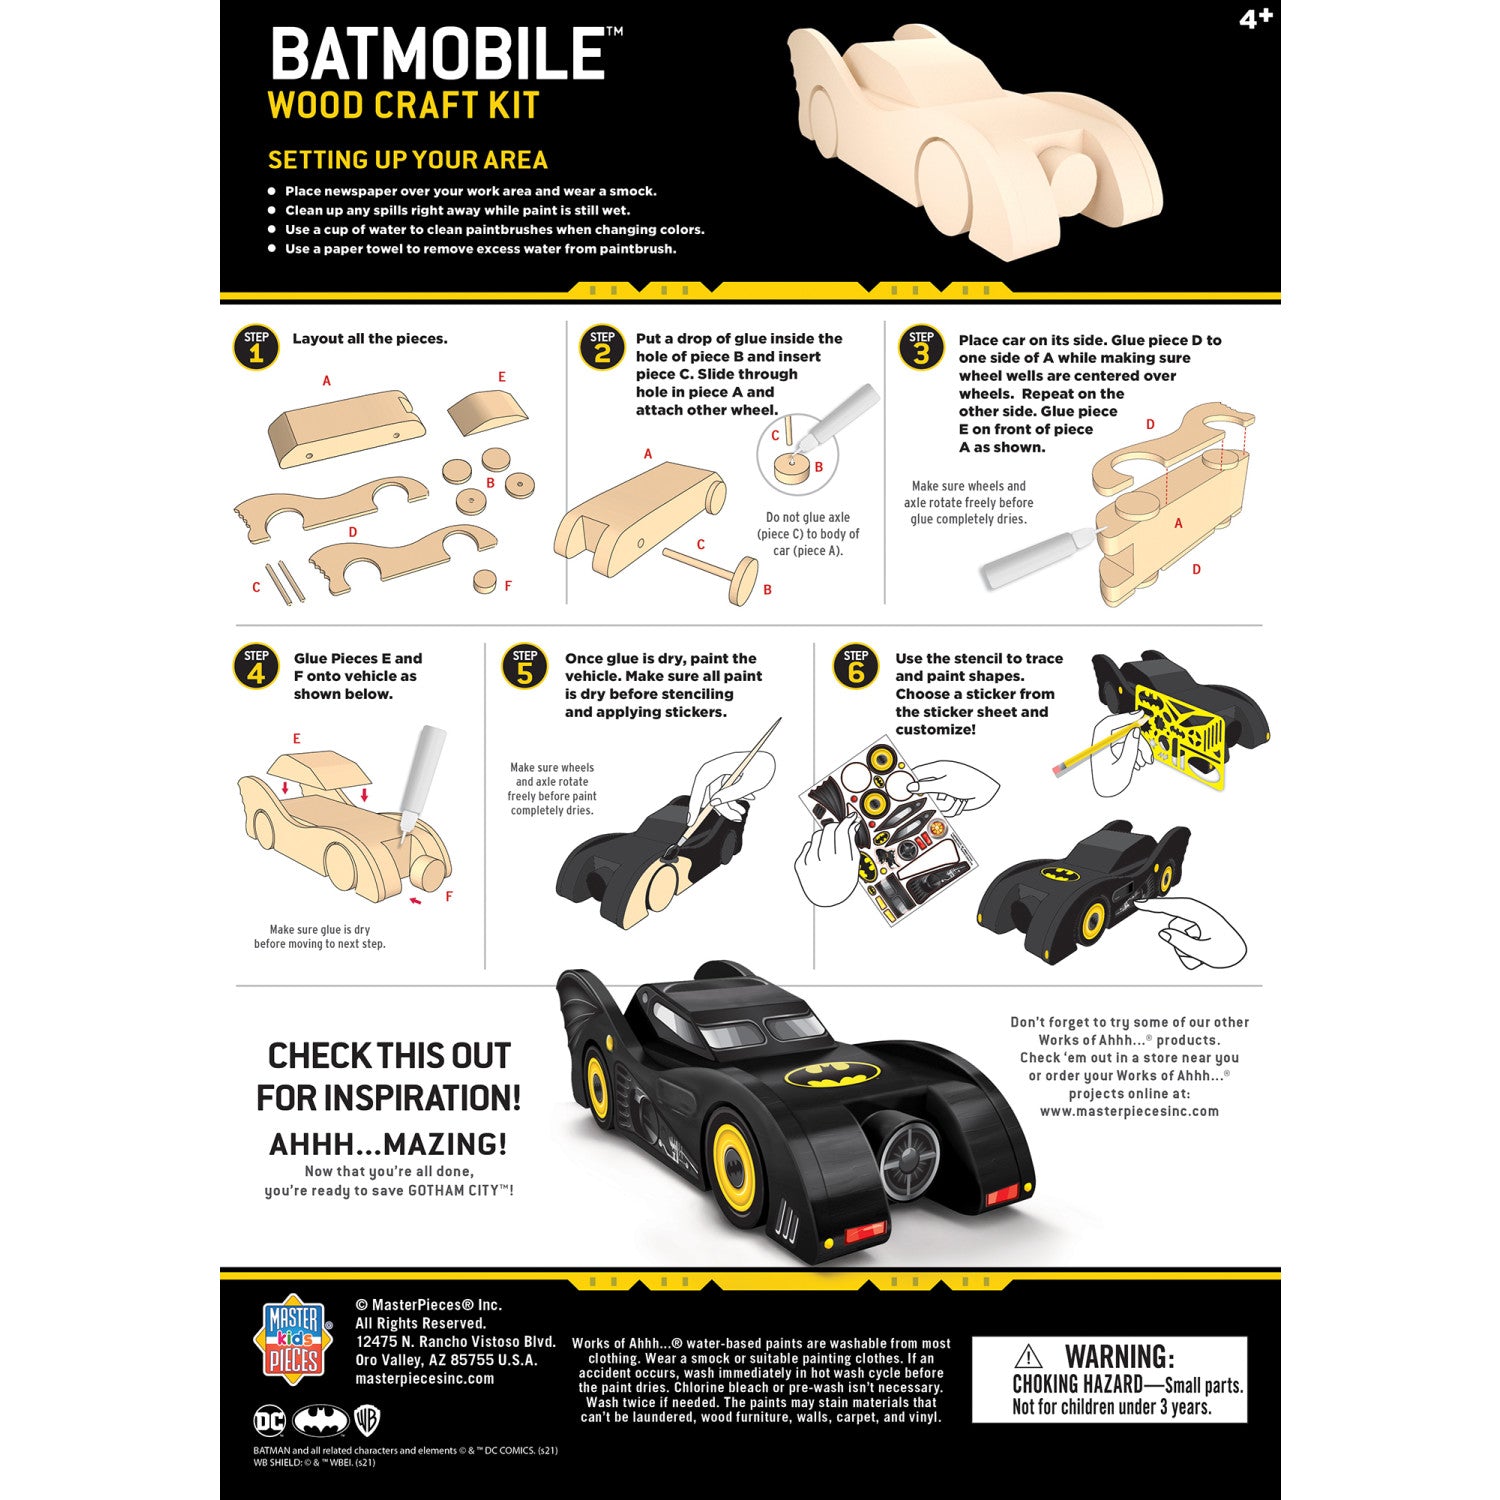 Batman - Batmobile Wood Craft Kit